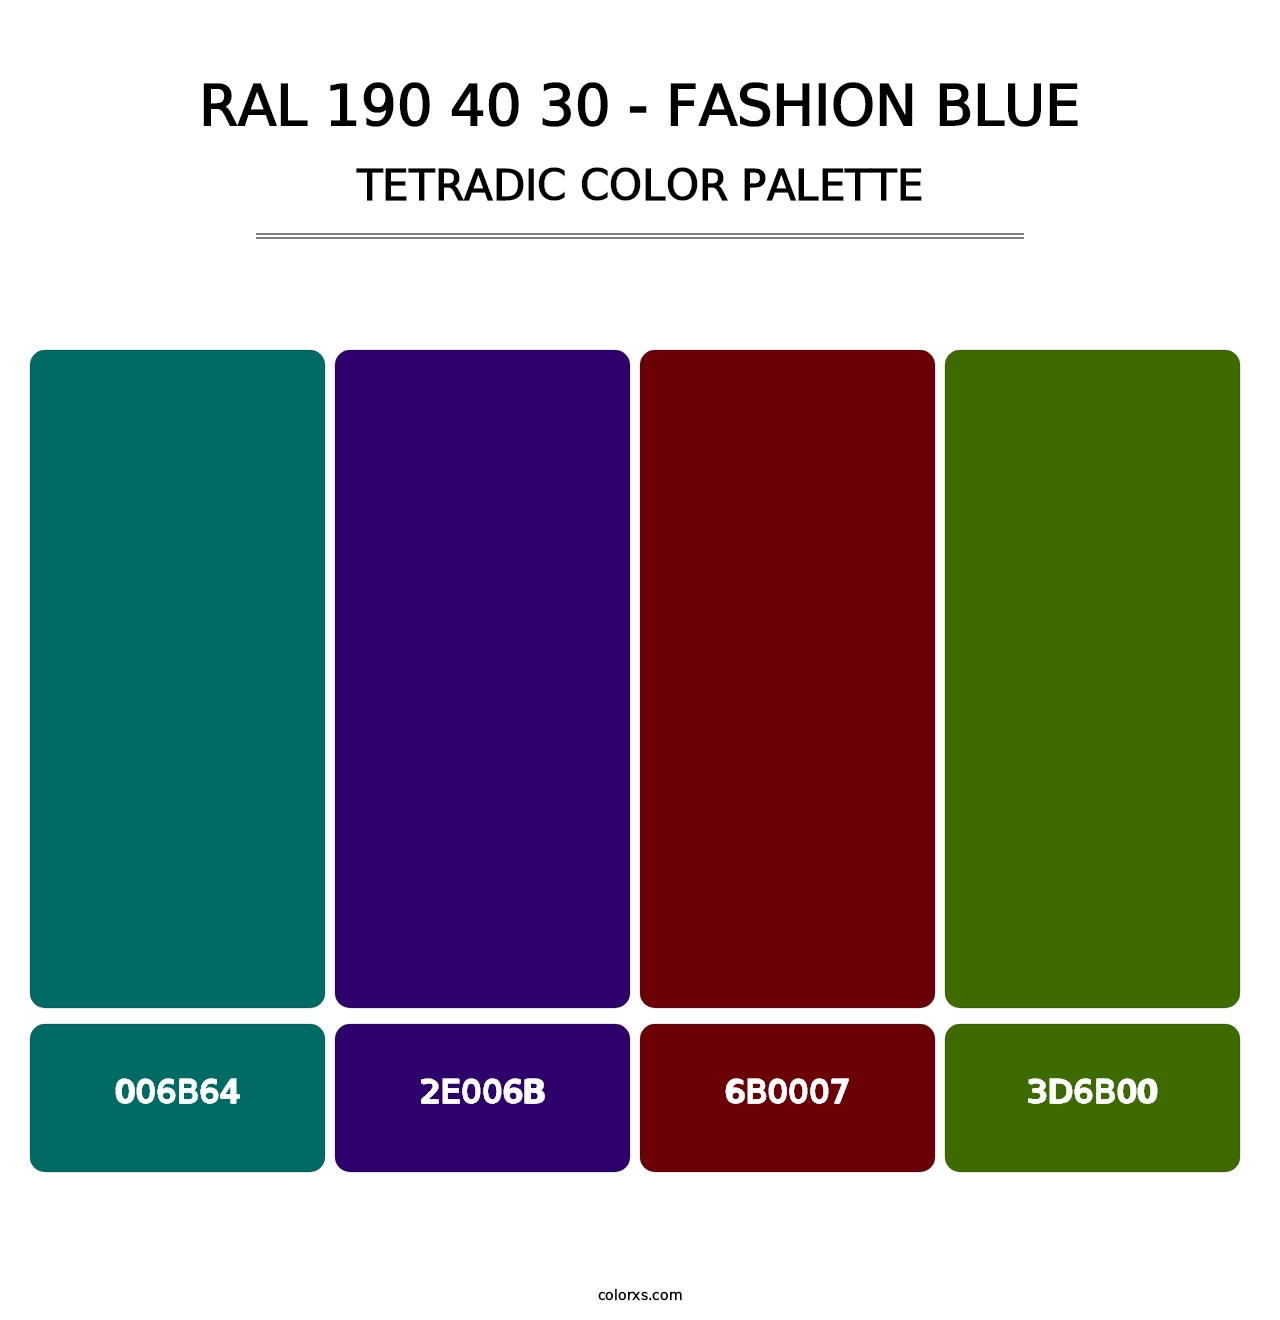 RAL 190 40 30 - Fashion Blue - Tetradic Color Palette